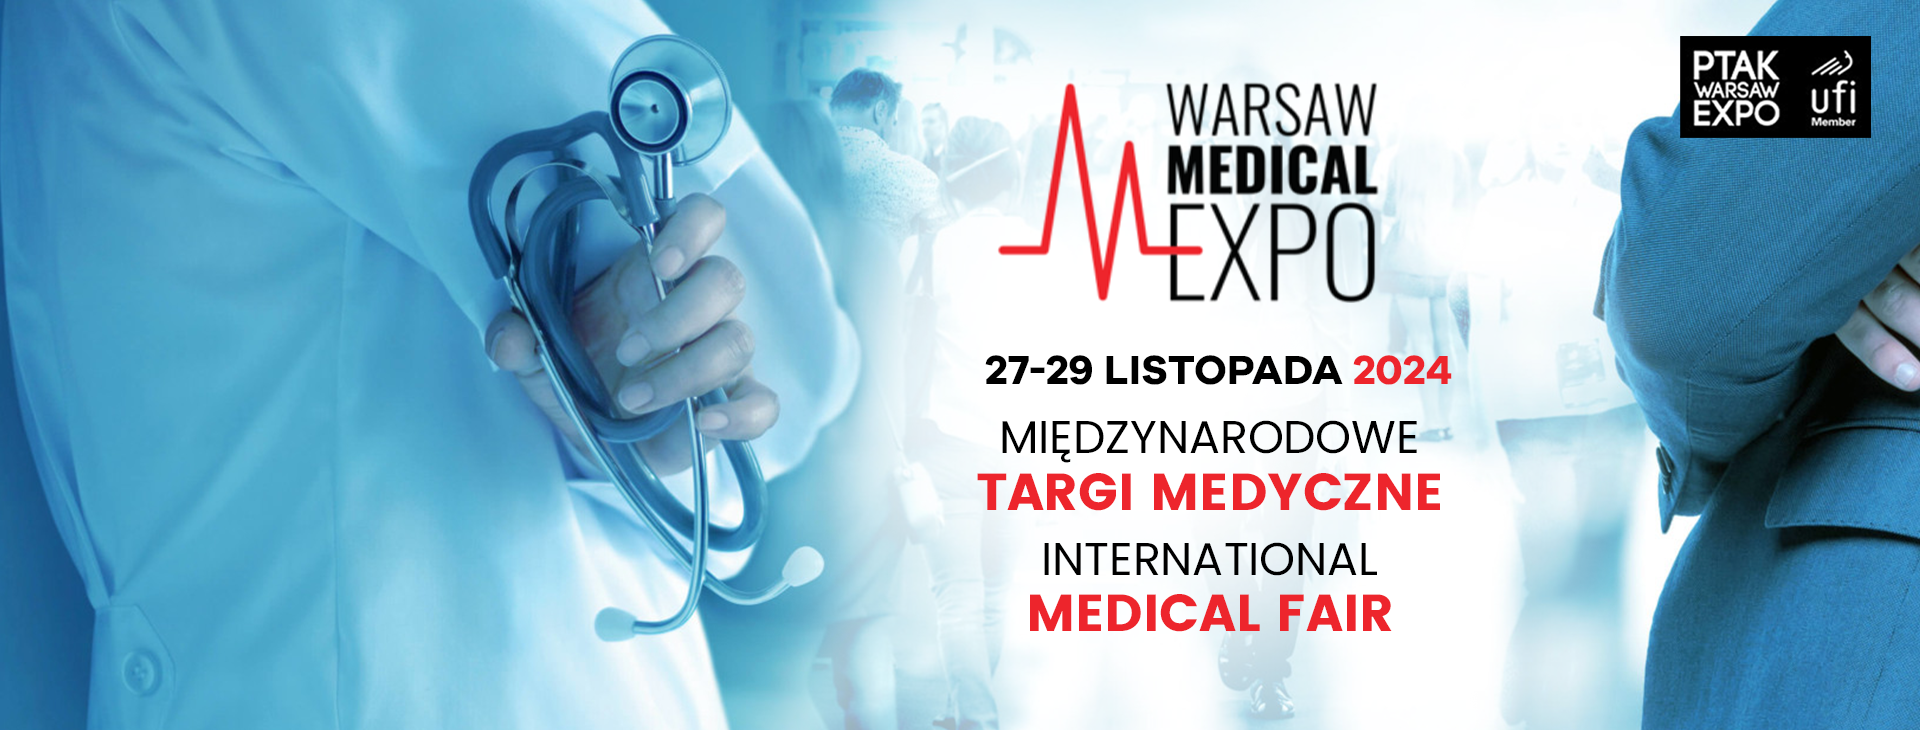 Warsaw Medical Expo 2024.png